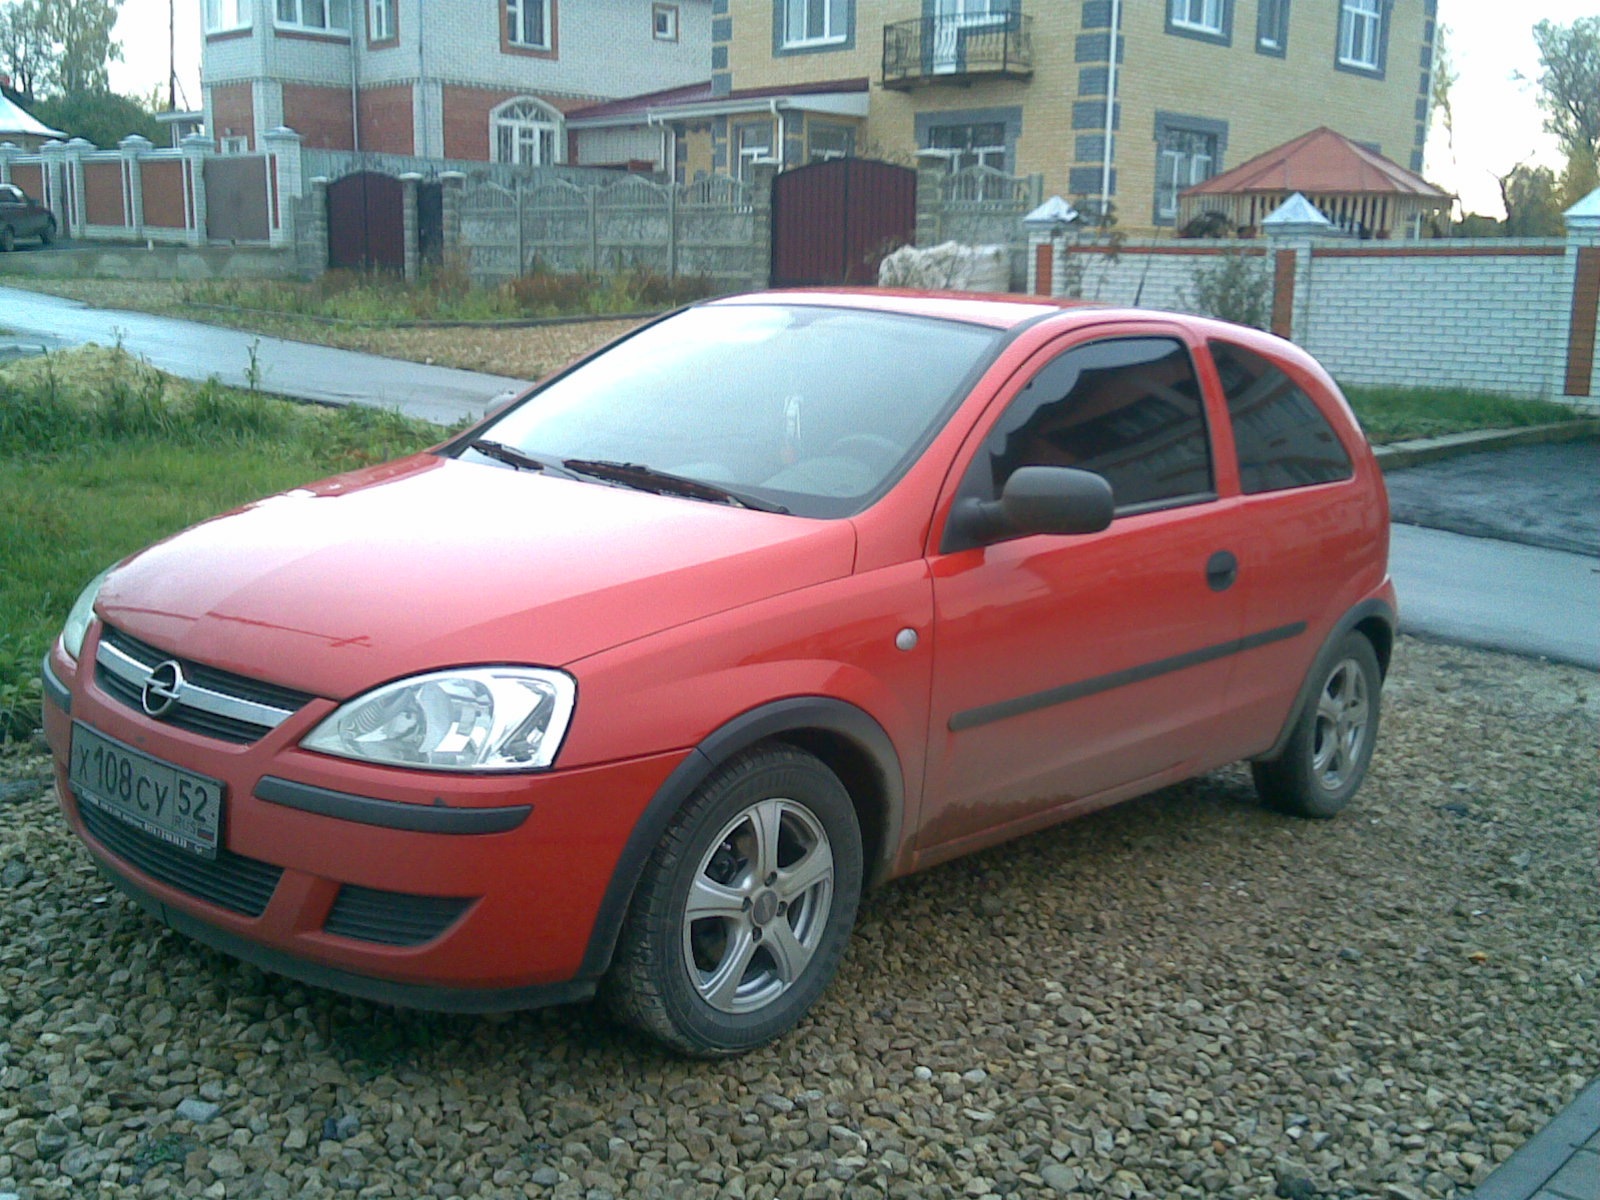 Opel corsa 2004. Опель Корса 2004. Opel Corsa 2004 года. Опель Корса 2004г. Опель Корса 2004 года красного цвета.